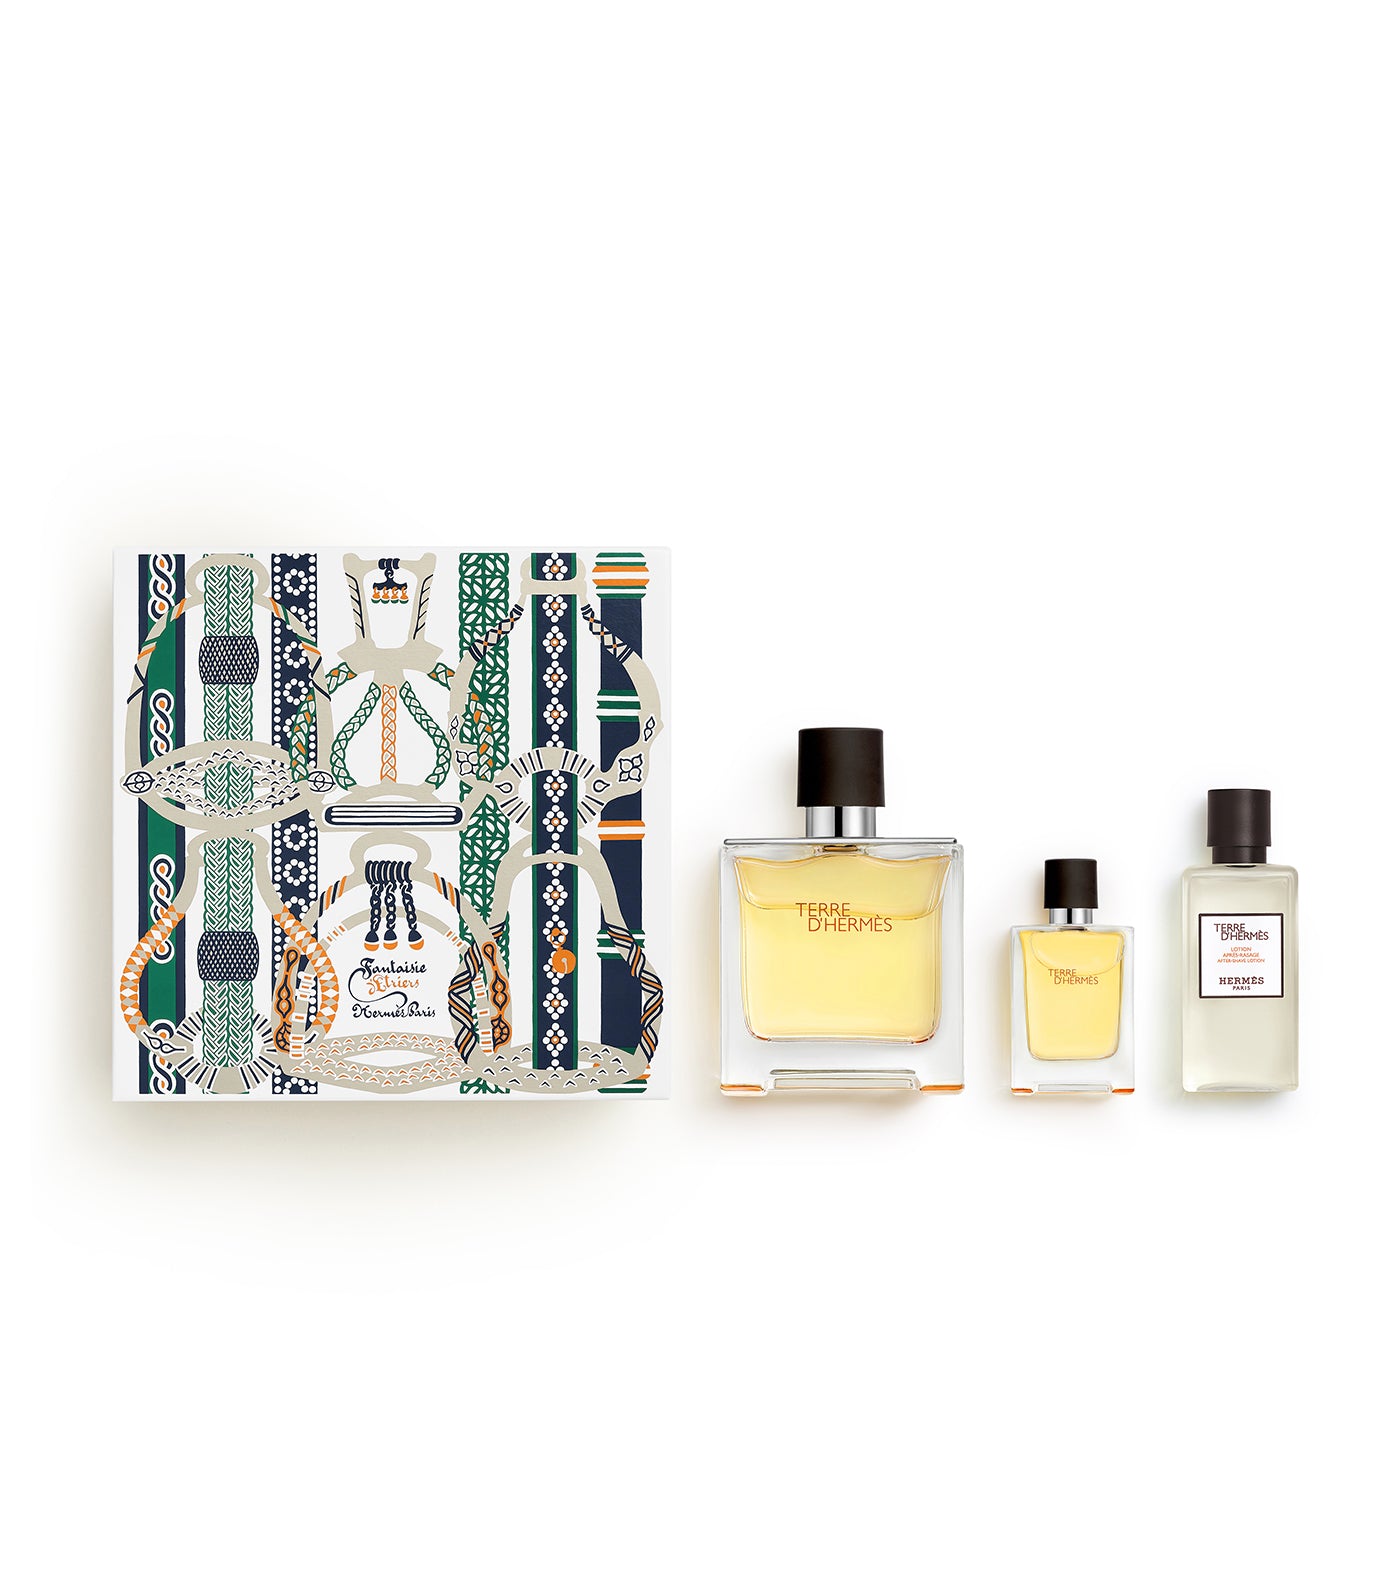 Terre d'Hermès gift set, Parfum, 75ml + 12.5ml + 40ml